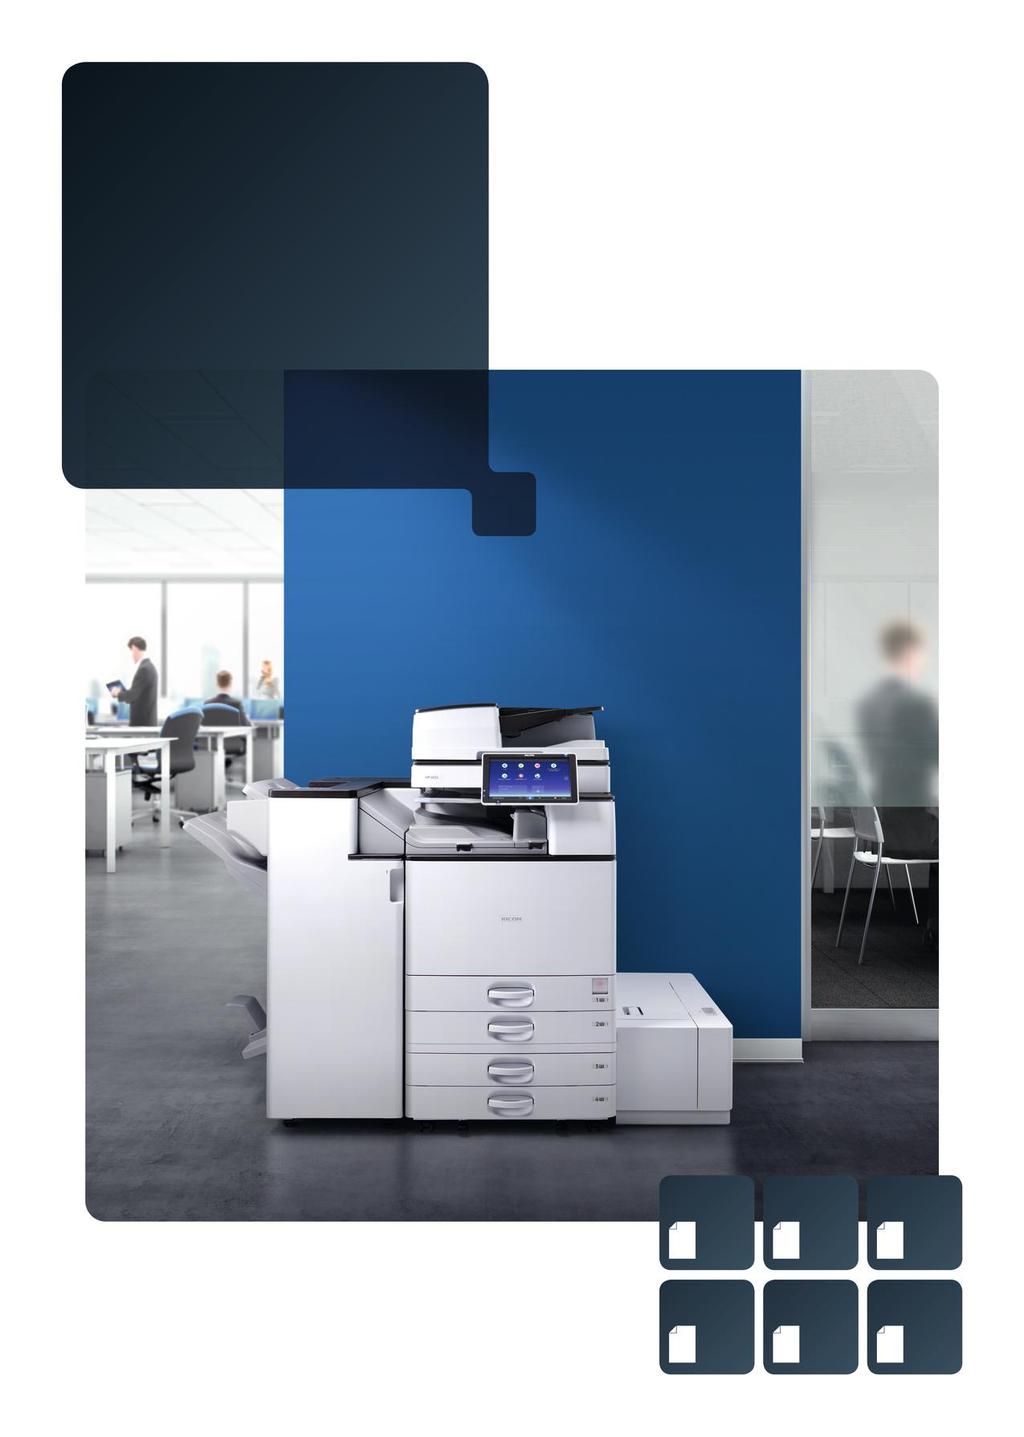 A3 Black and White MFP 2555 3055 3555 4055 5055 6055 Series Copier Printer Scanner Facsimile 2555(A)SP 3055(A)SP 3555(A)SP 25